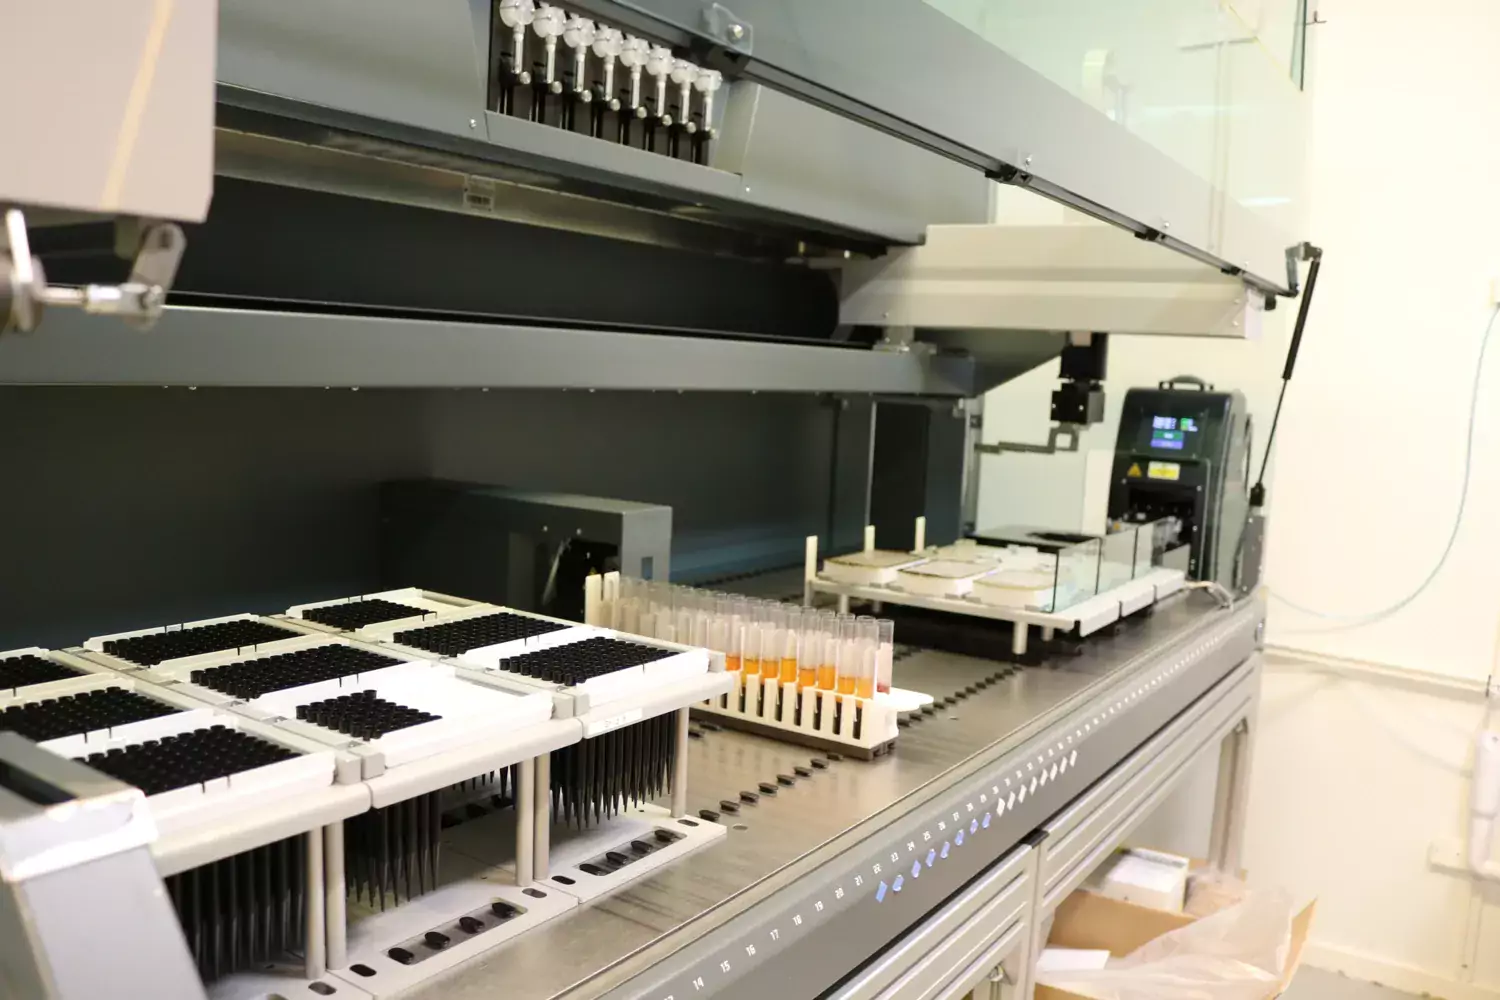 Automated handling of samples at KIBB.